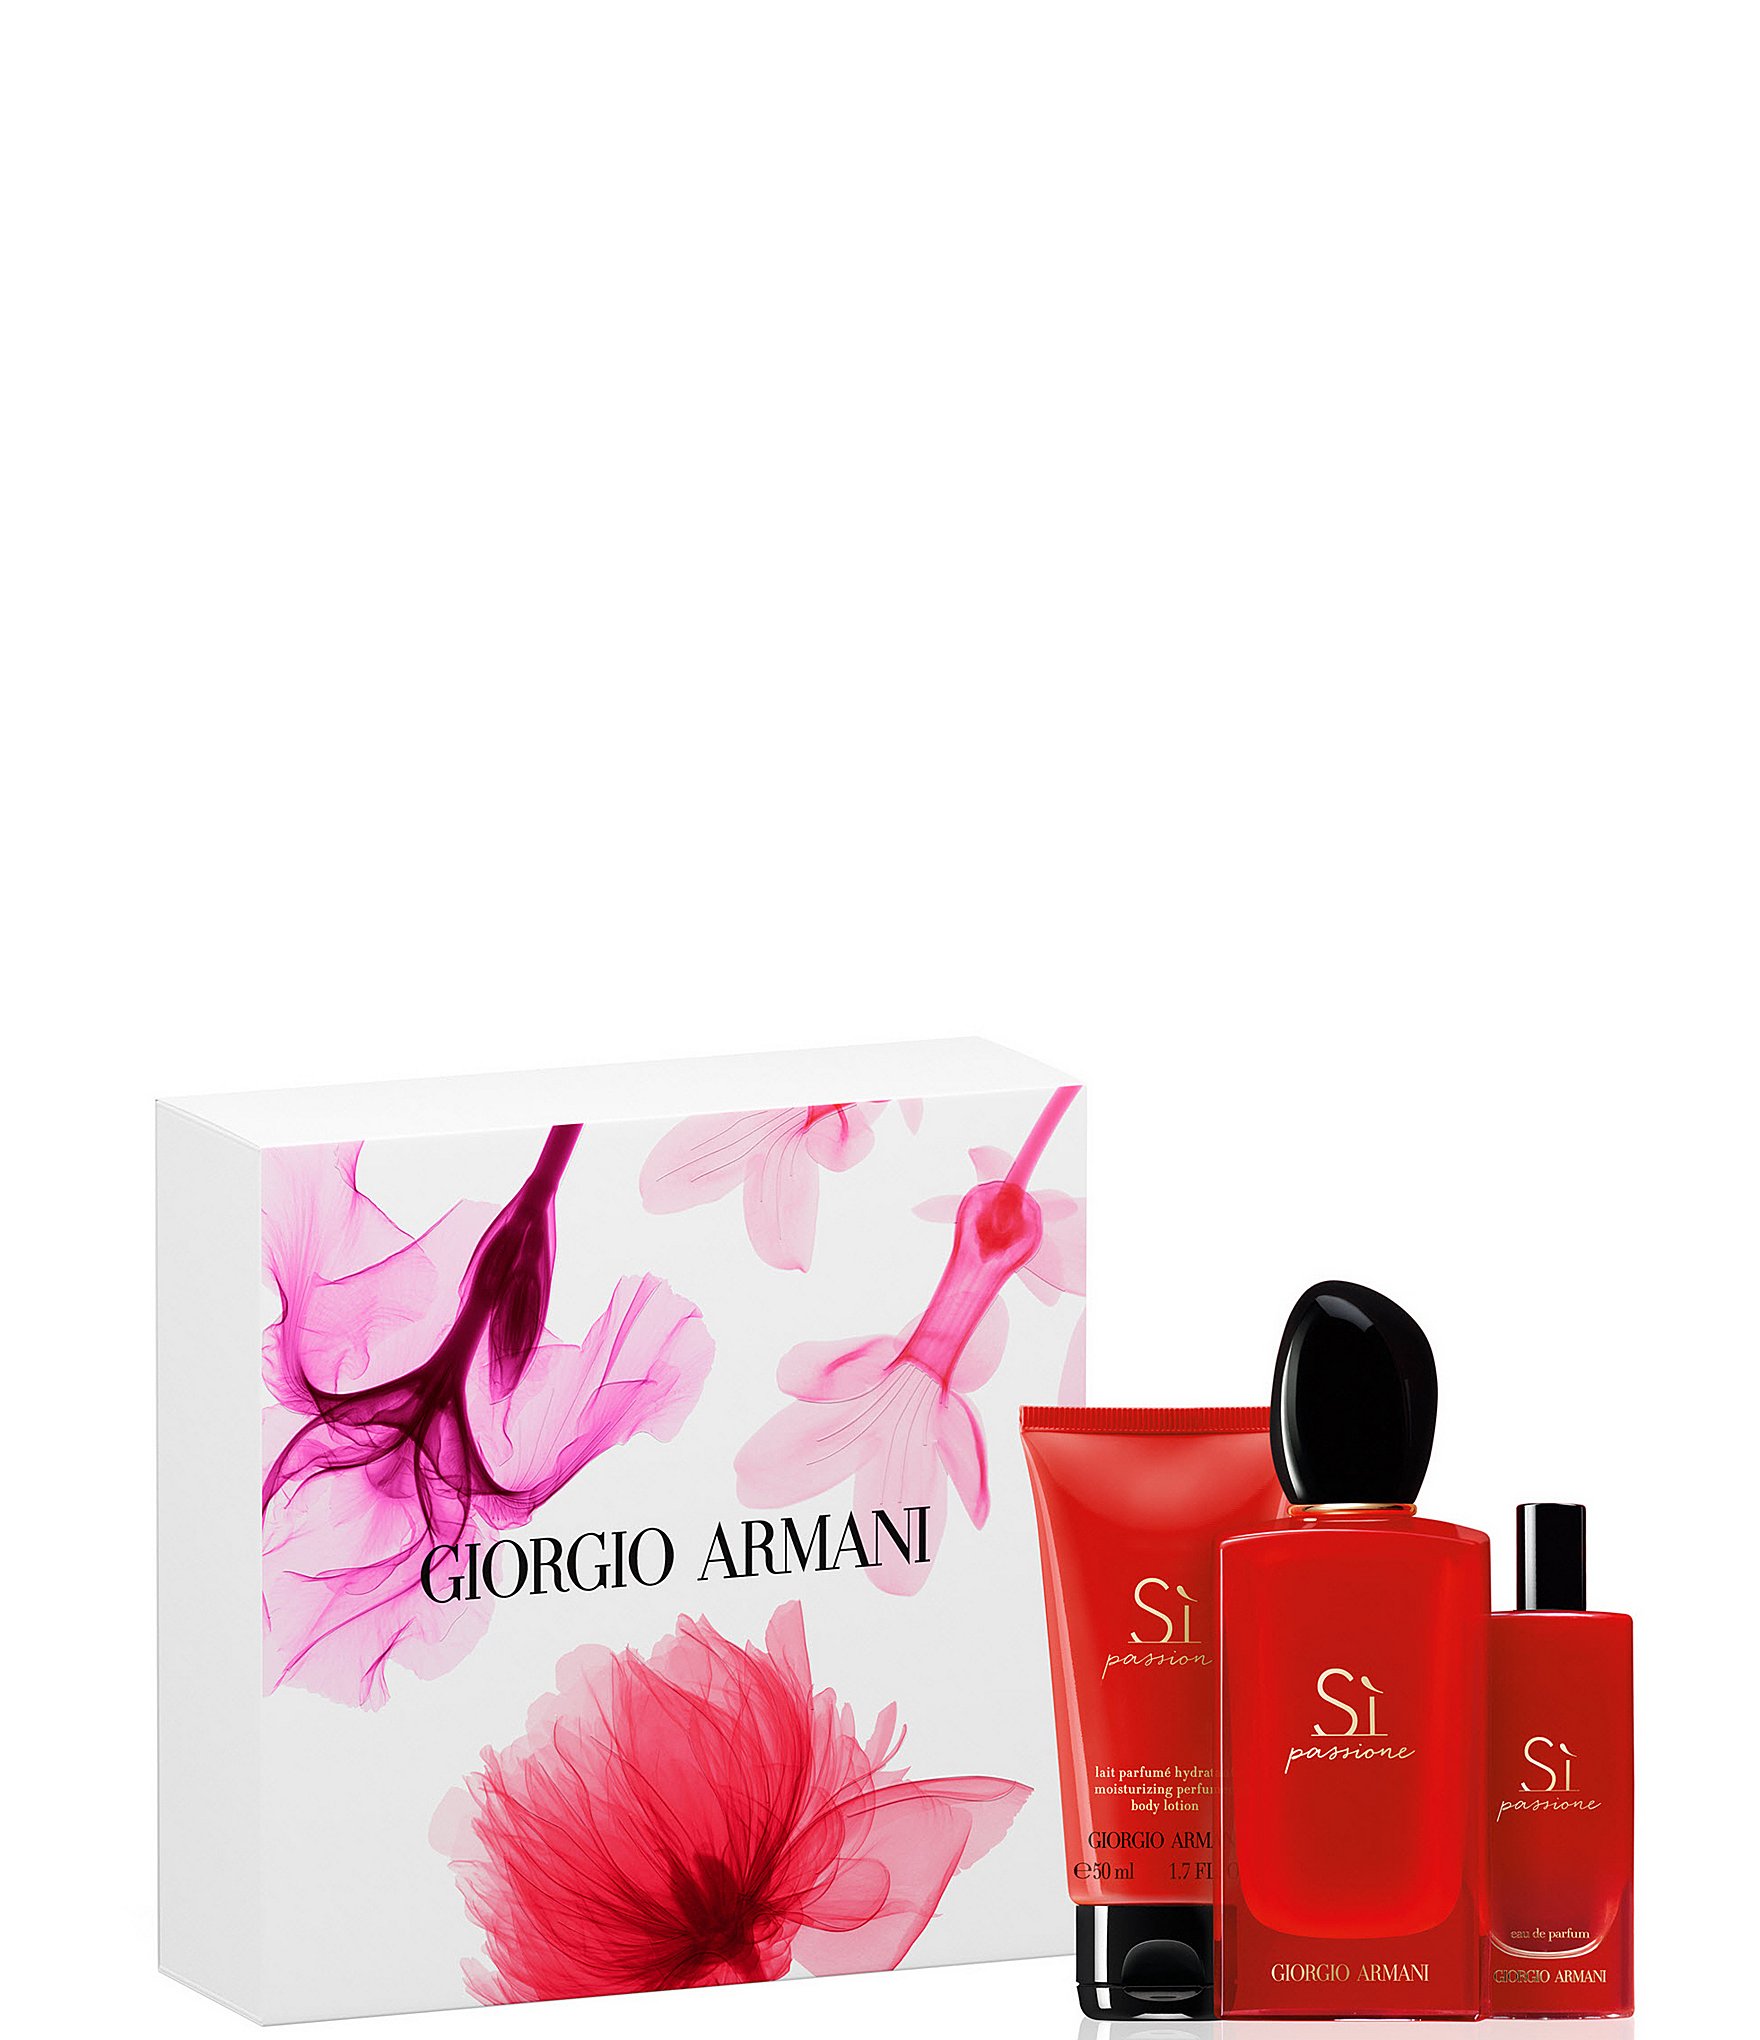 Giorgio Armani ARMANI Beauty Passione Eau de Parfum Gift Set Dillard's